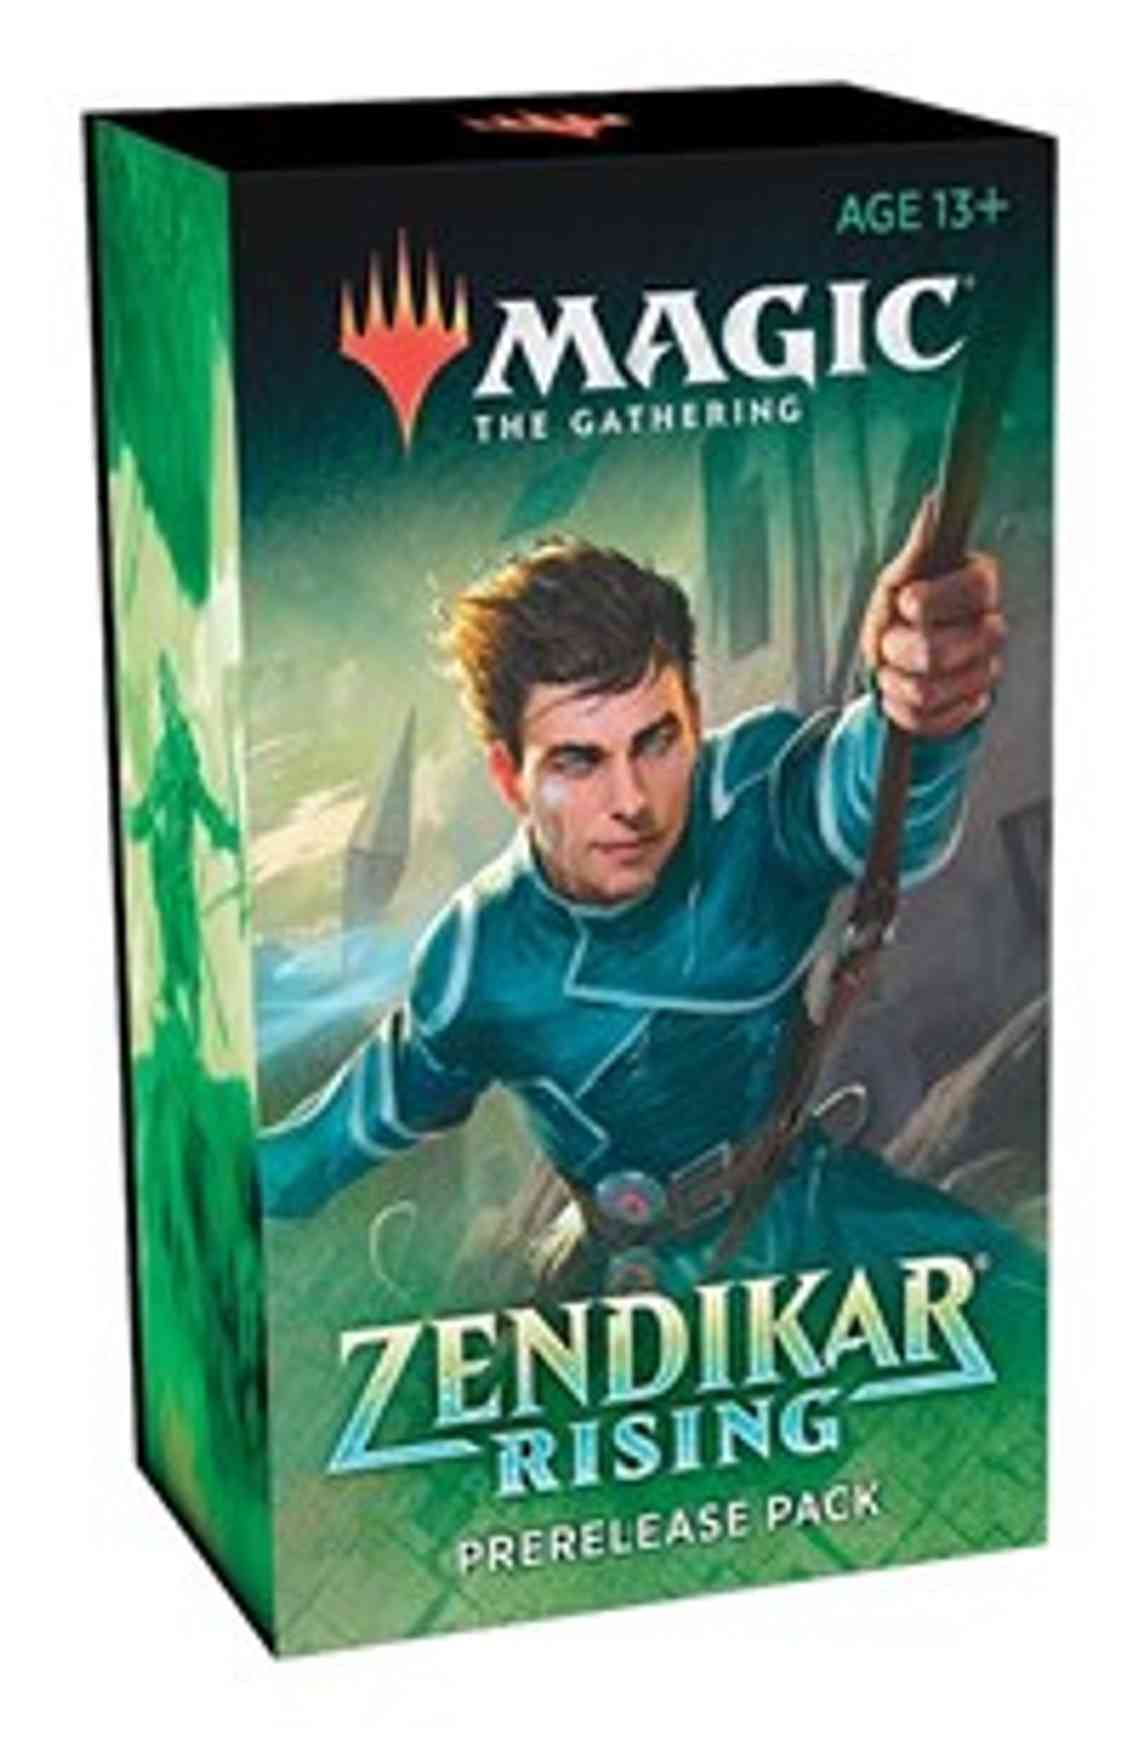 Zendikar Rising - Prerelease Pack magic card front